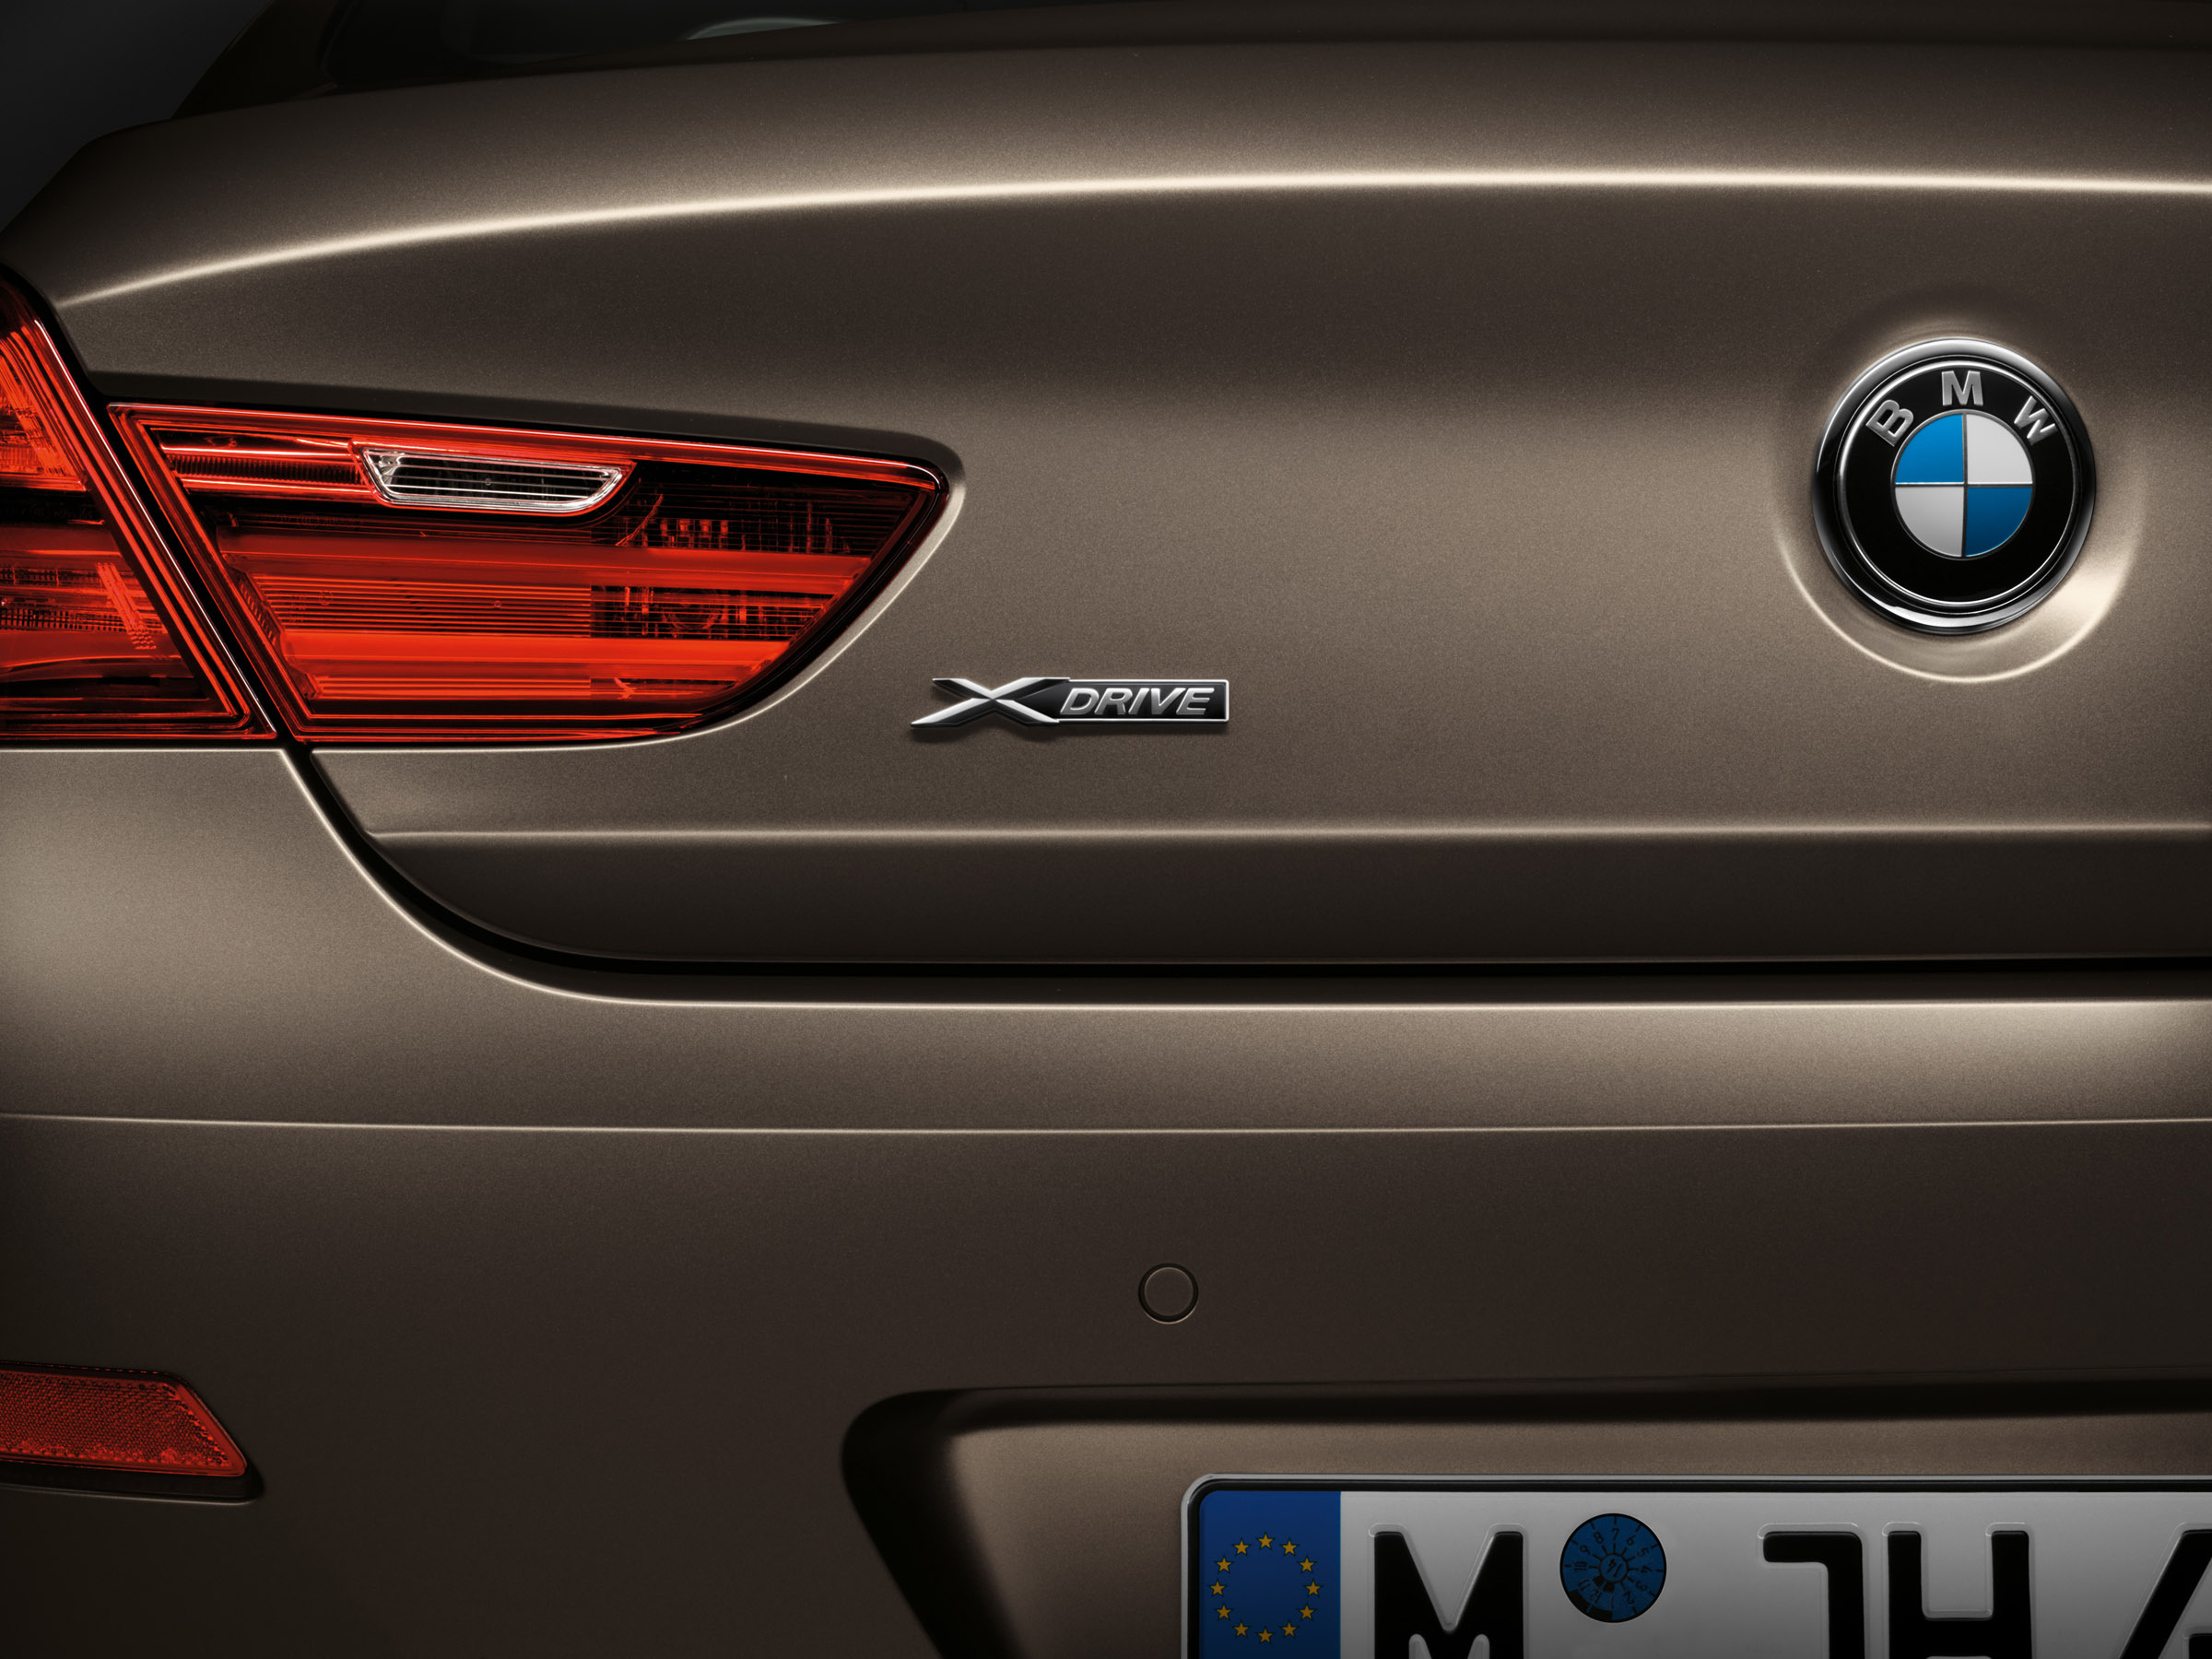 BMW 6-Series Gran Coupe